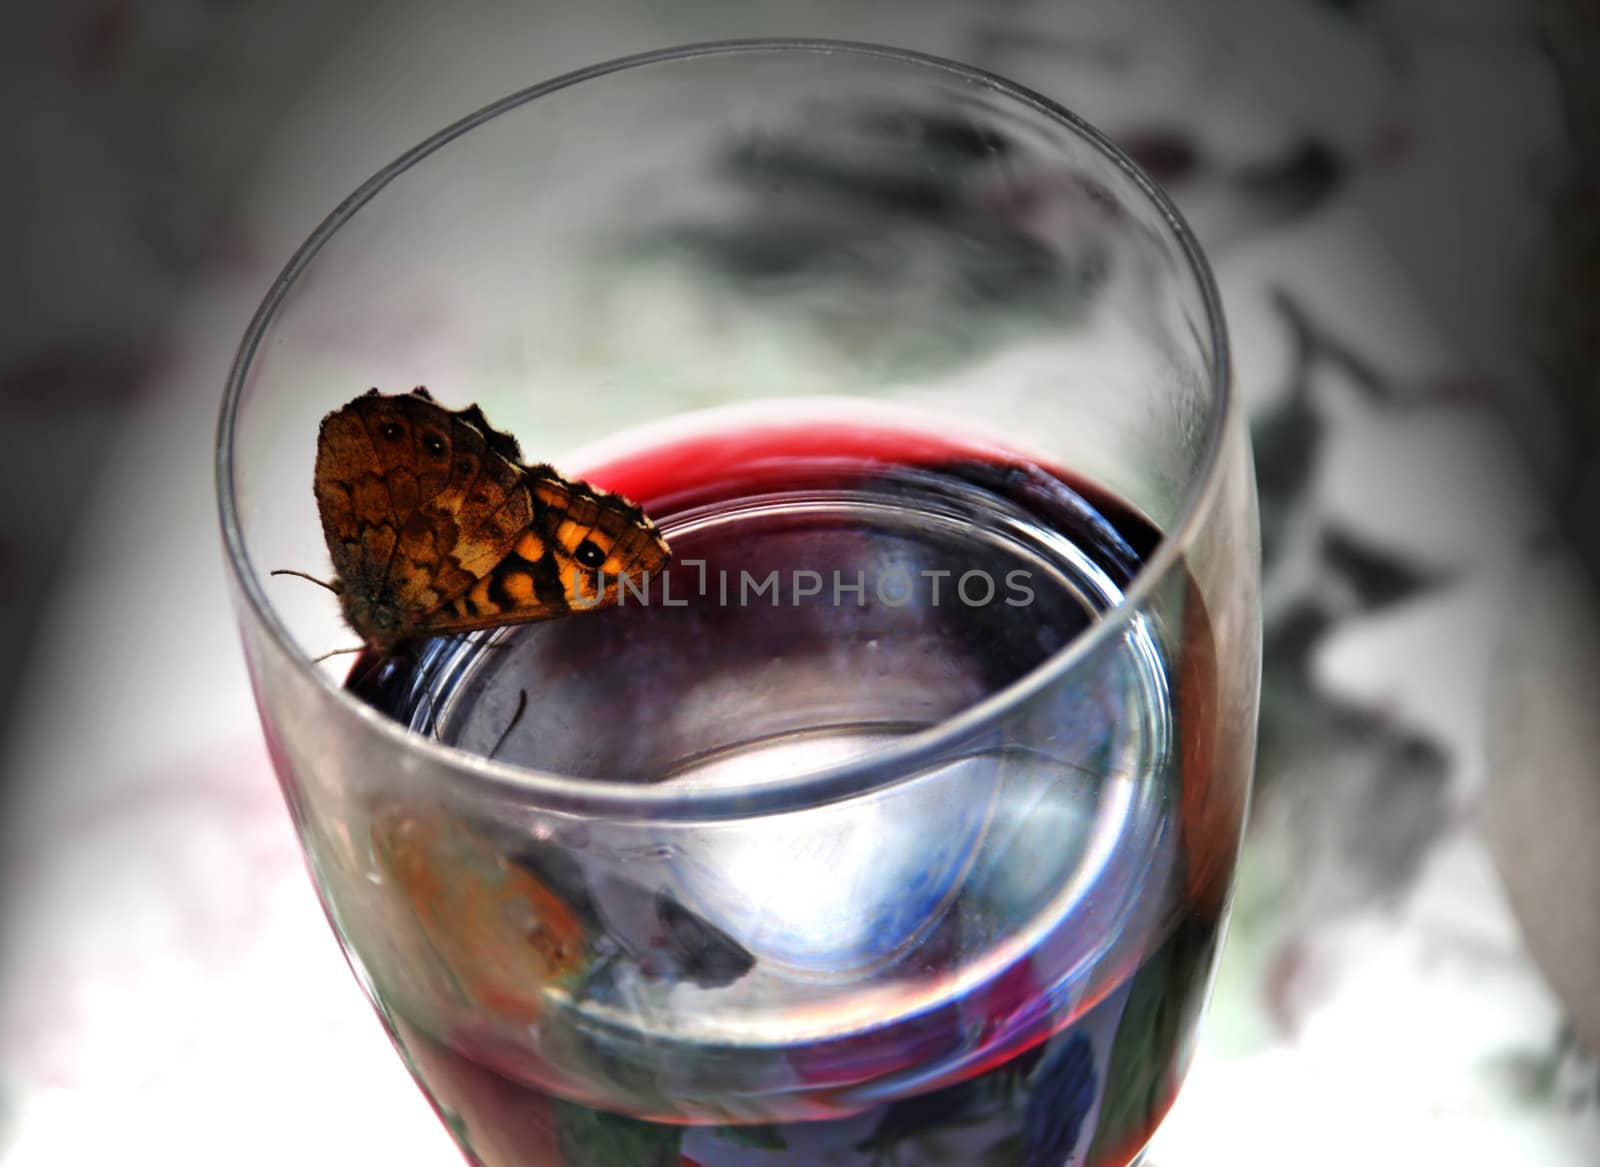 butterfly in wineglass closeup drinking red wine